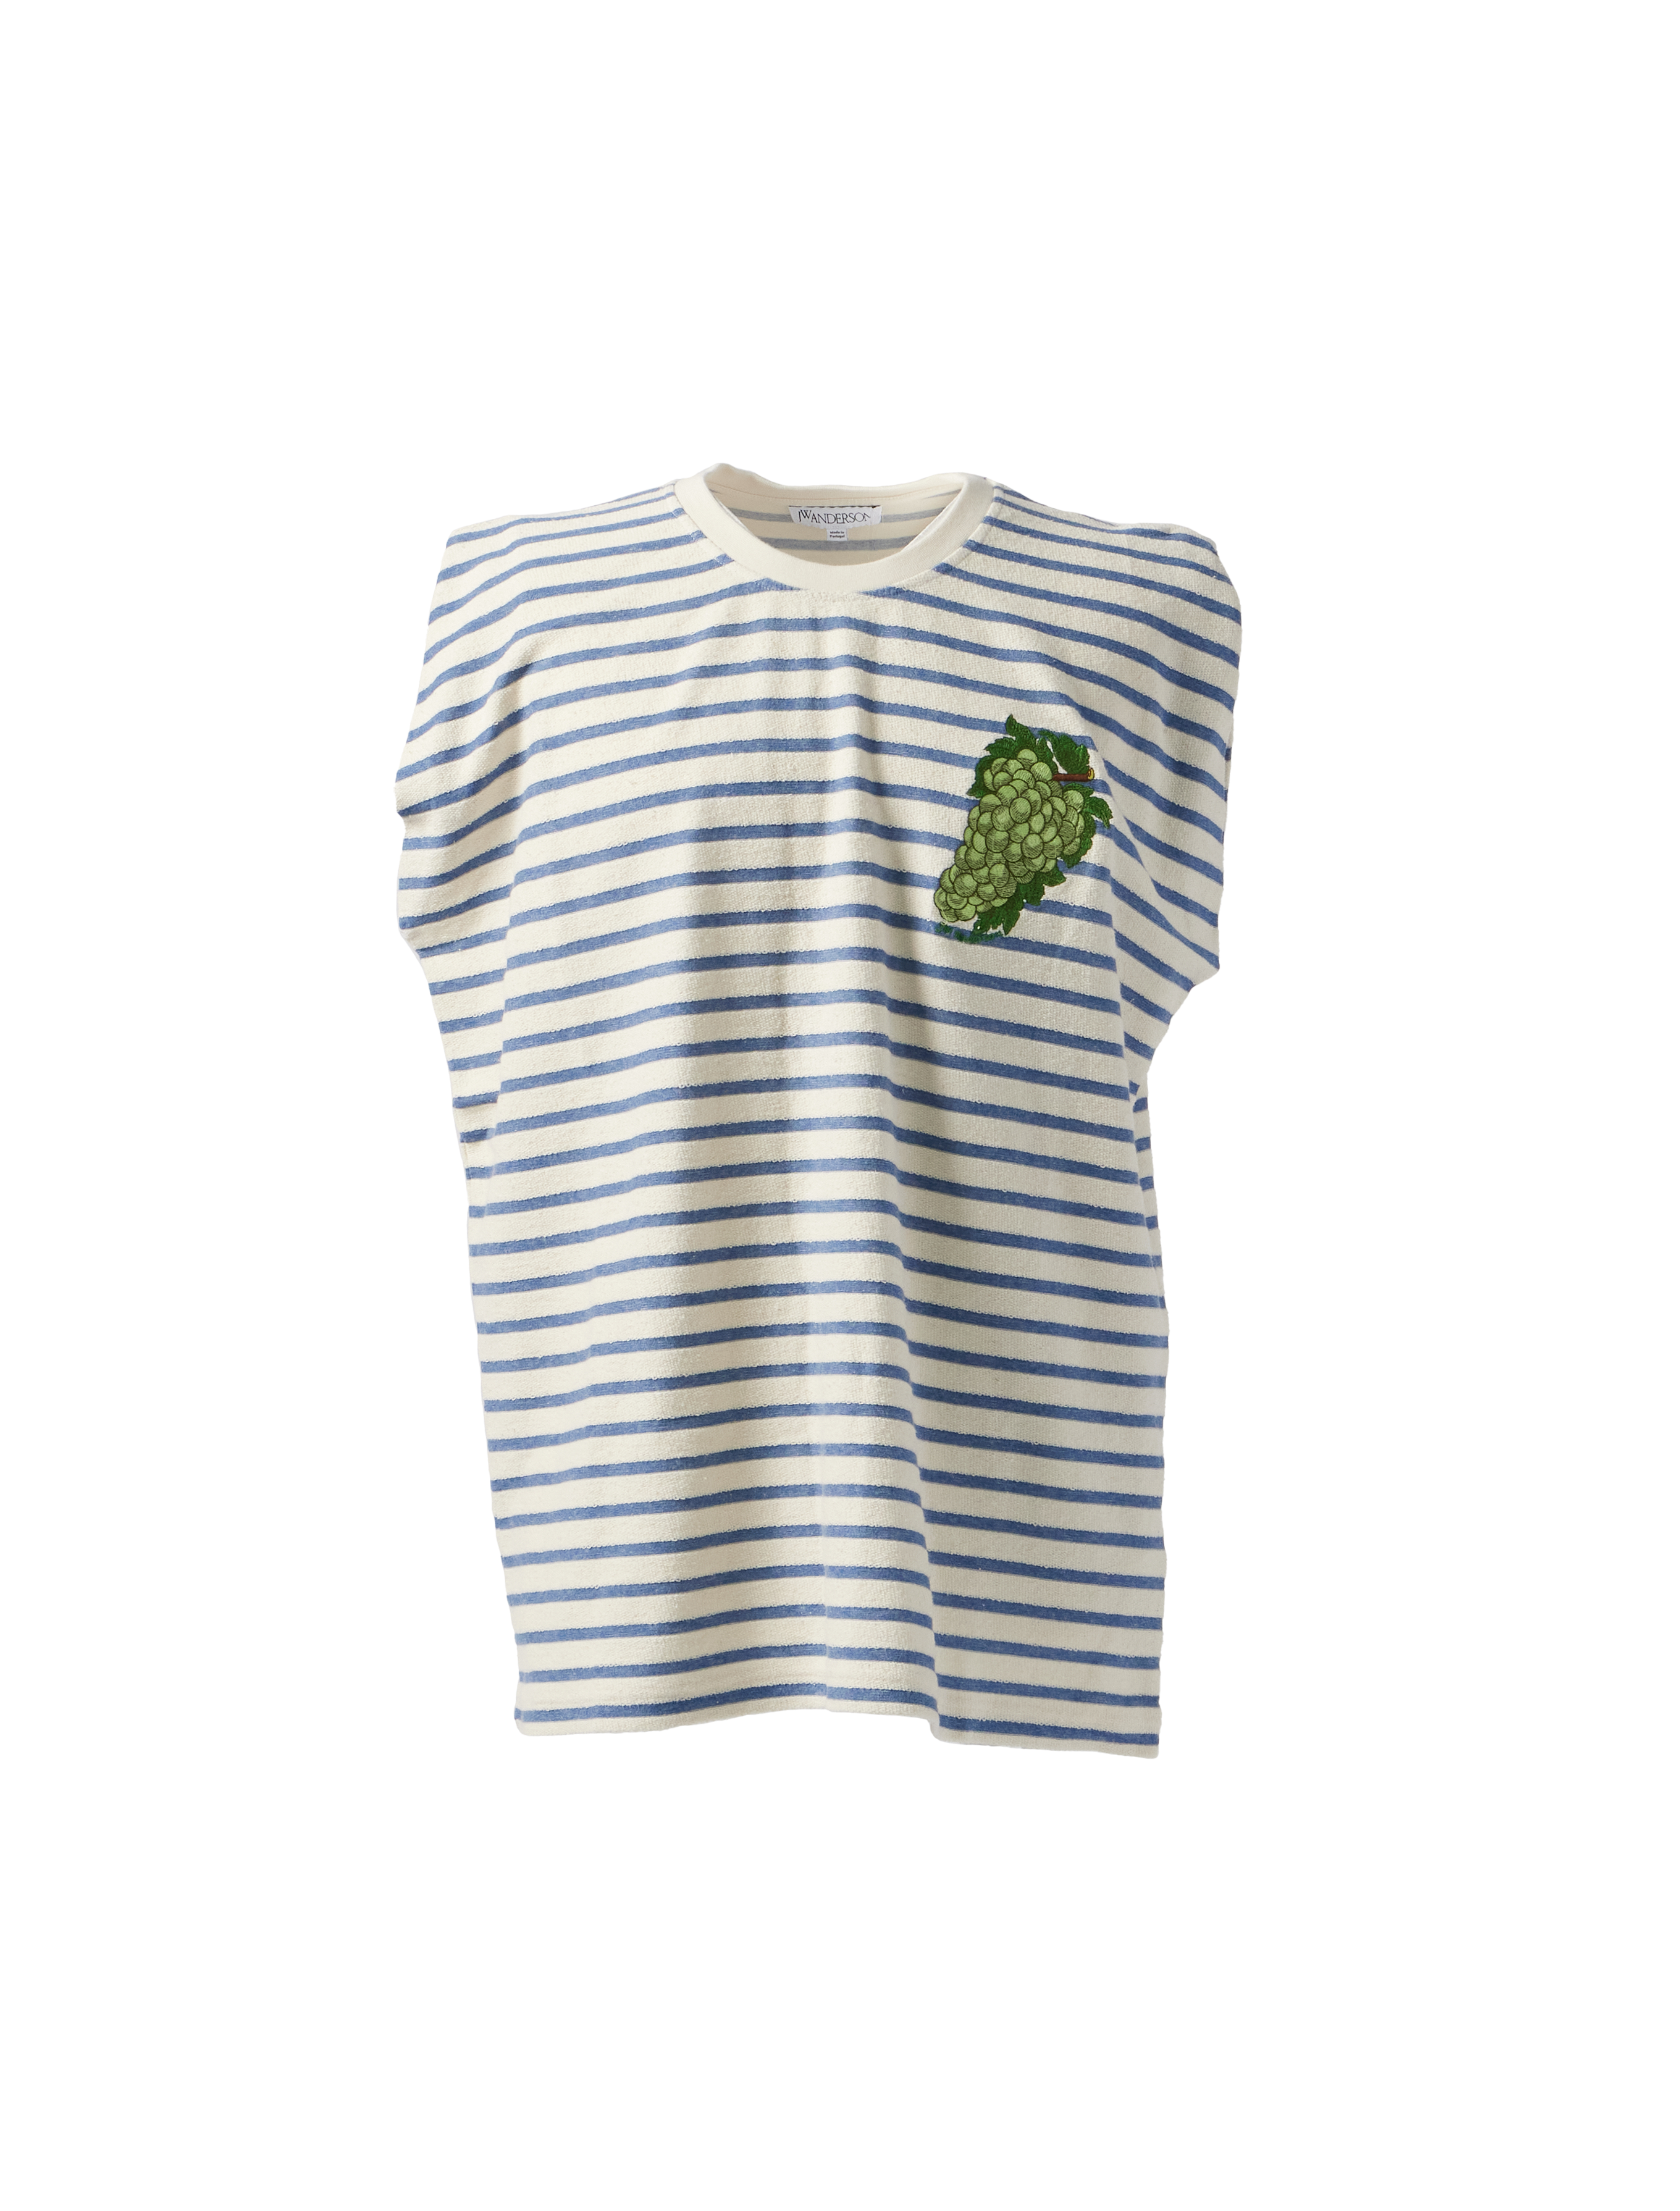 JW ANDERSON - Grape Sleeveless T-Shirt product image